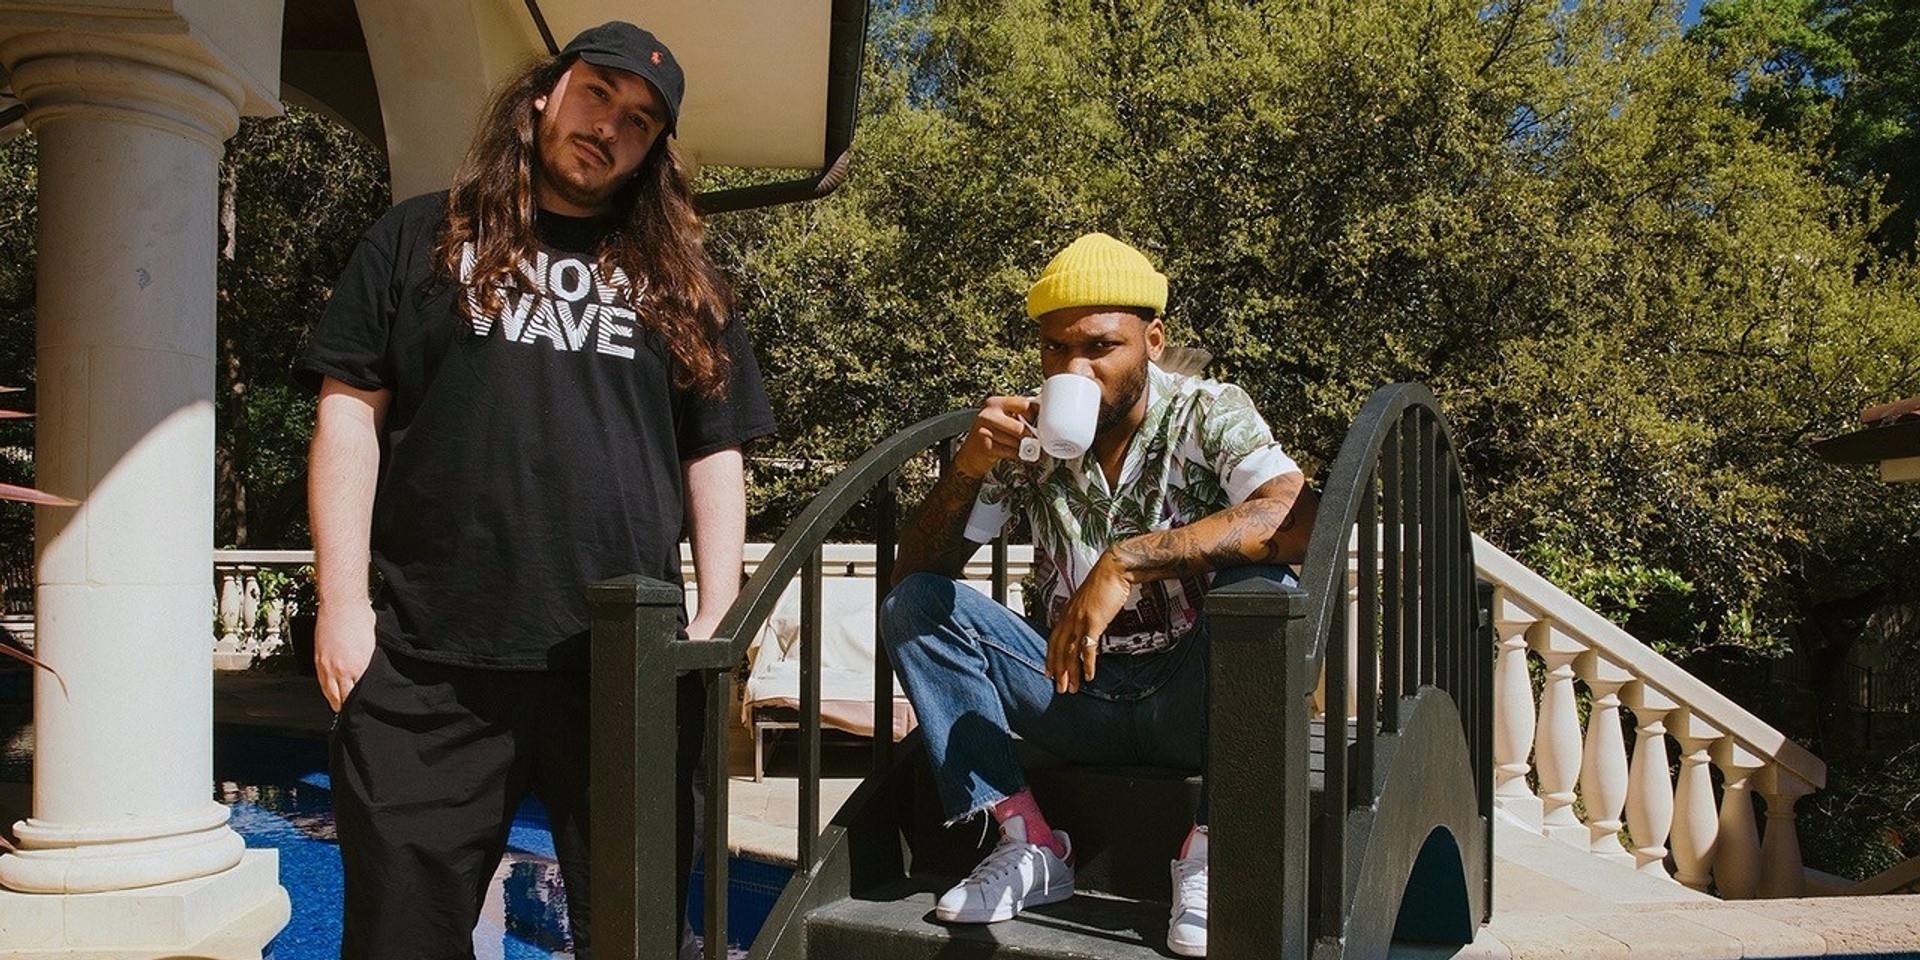 A$AP Mob's The Cozy Boys to headline Cherry Discotheque